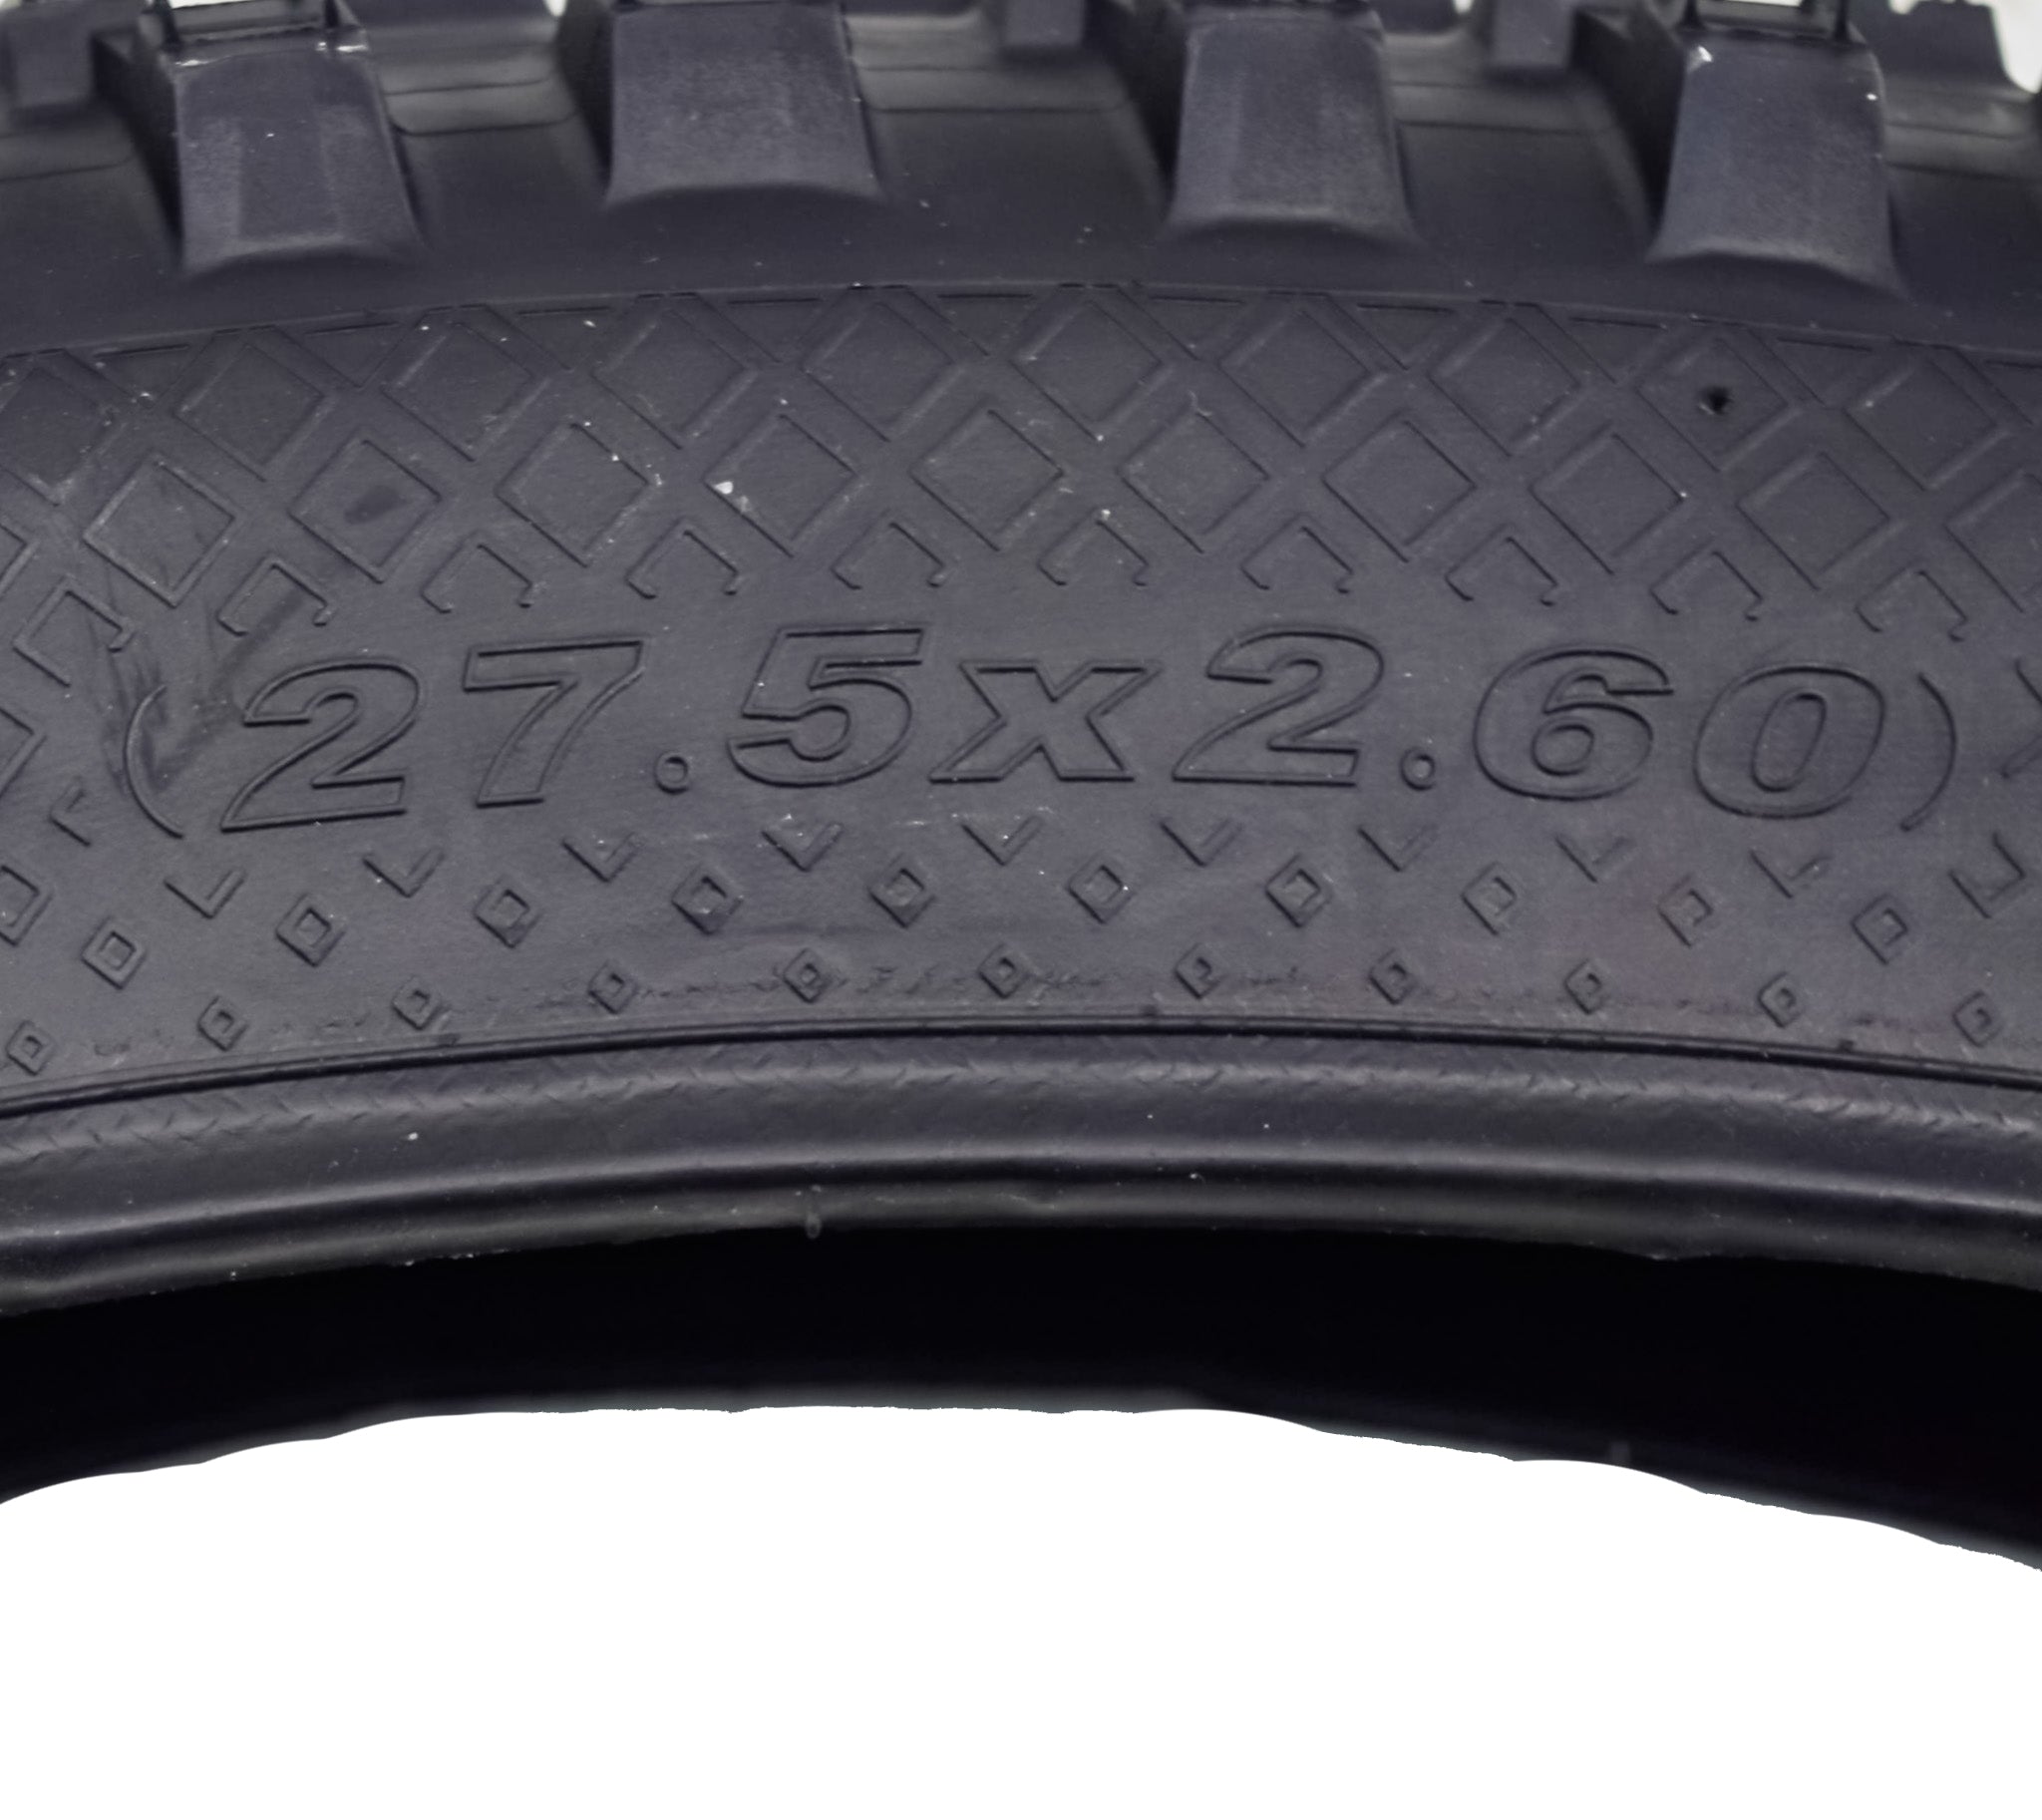 Kenda Nevegal 2 Pro ATC 120tpi Fold 27.5x2.40 27.5x2.60 Trail Bicycle Tire